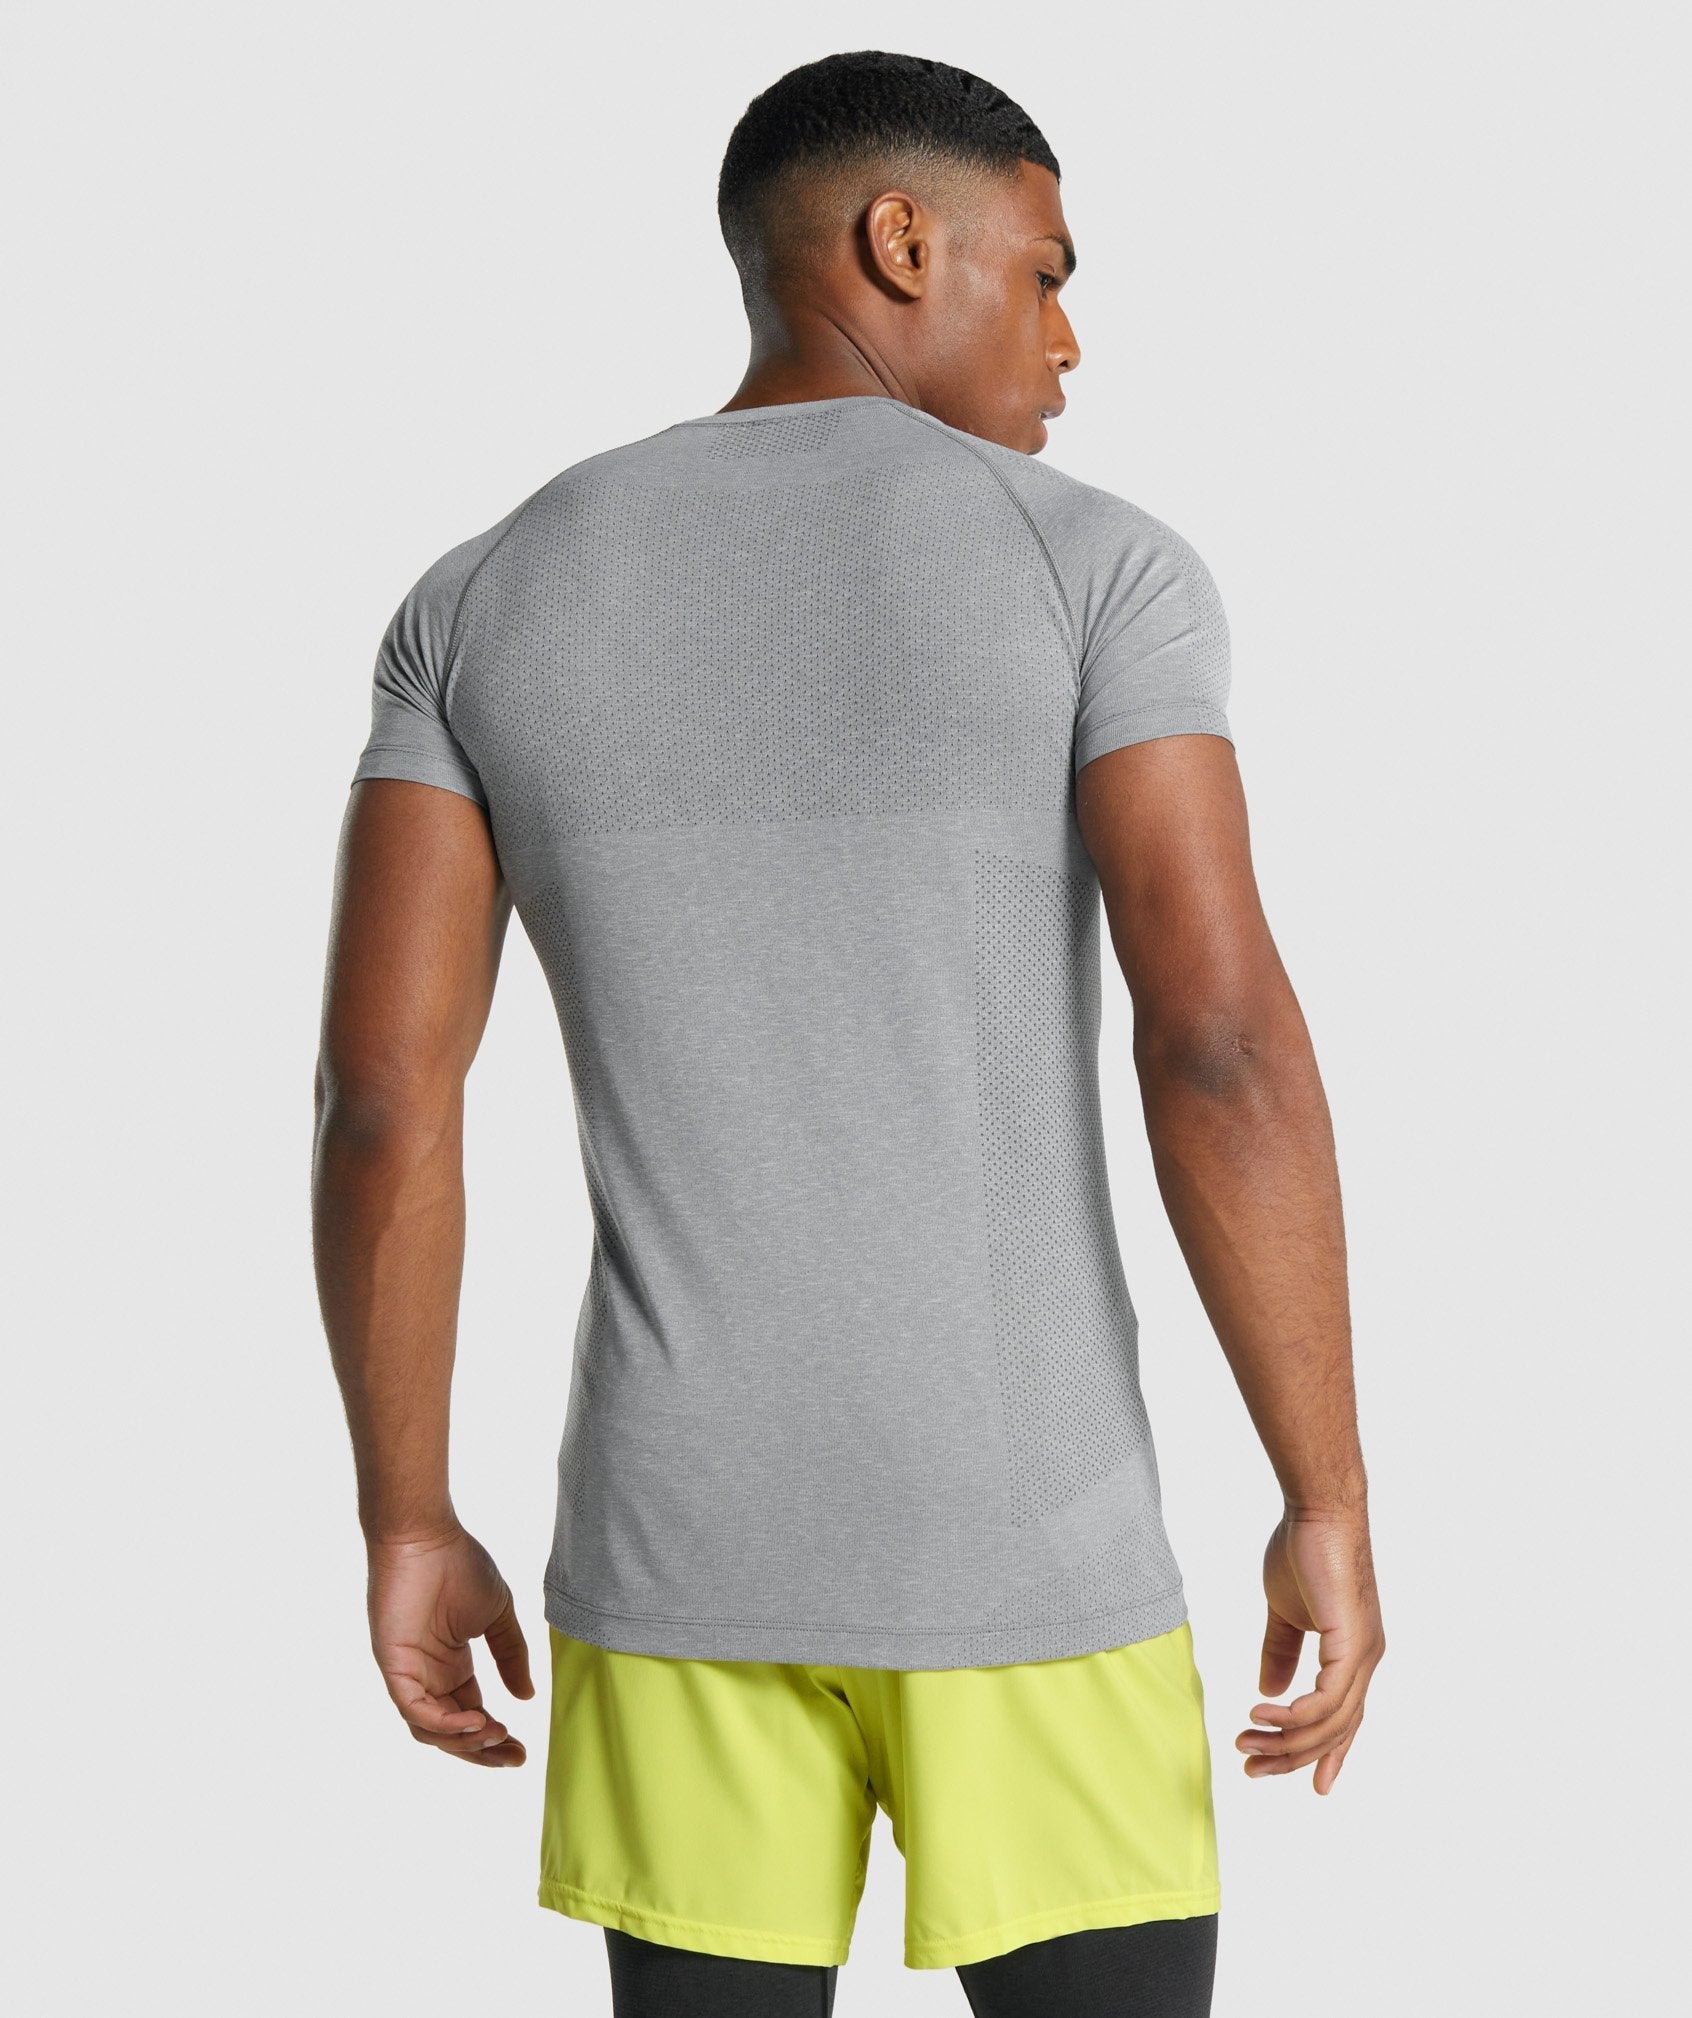 Vital Light Seamless T-Shirt in Charcoal Marl - view 2